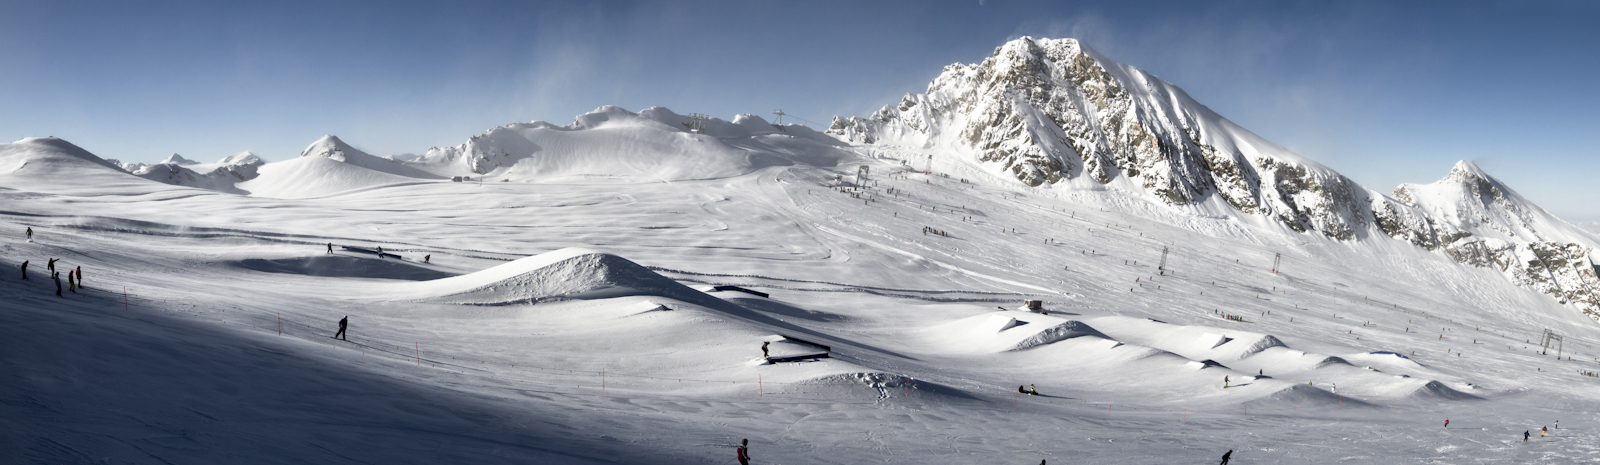 Snowpark_Kitzsteinhorn_Panorama_by_Roland_Haschka_QParks_001